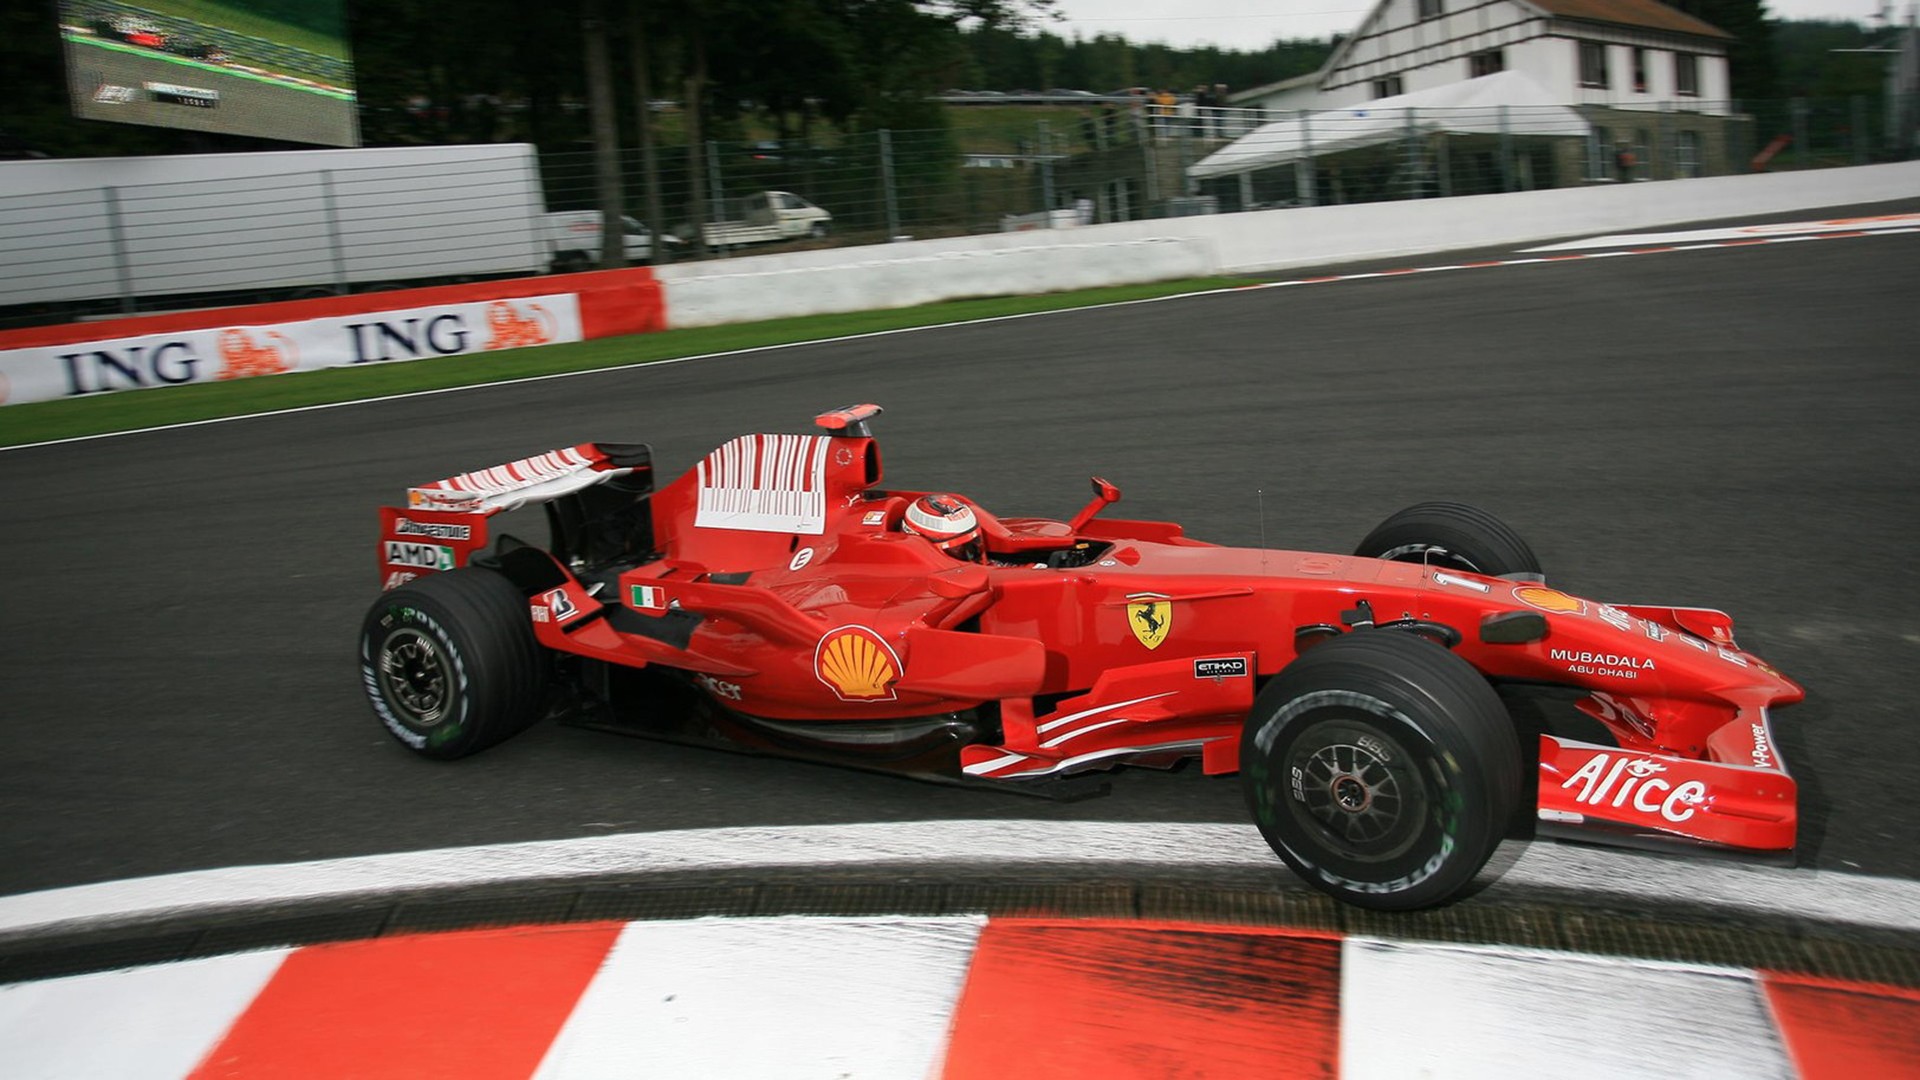 Ferrari F2008 Wallpapers